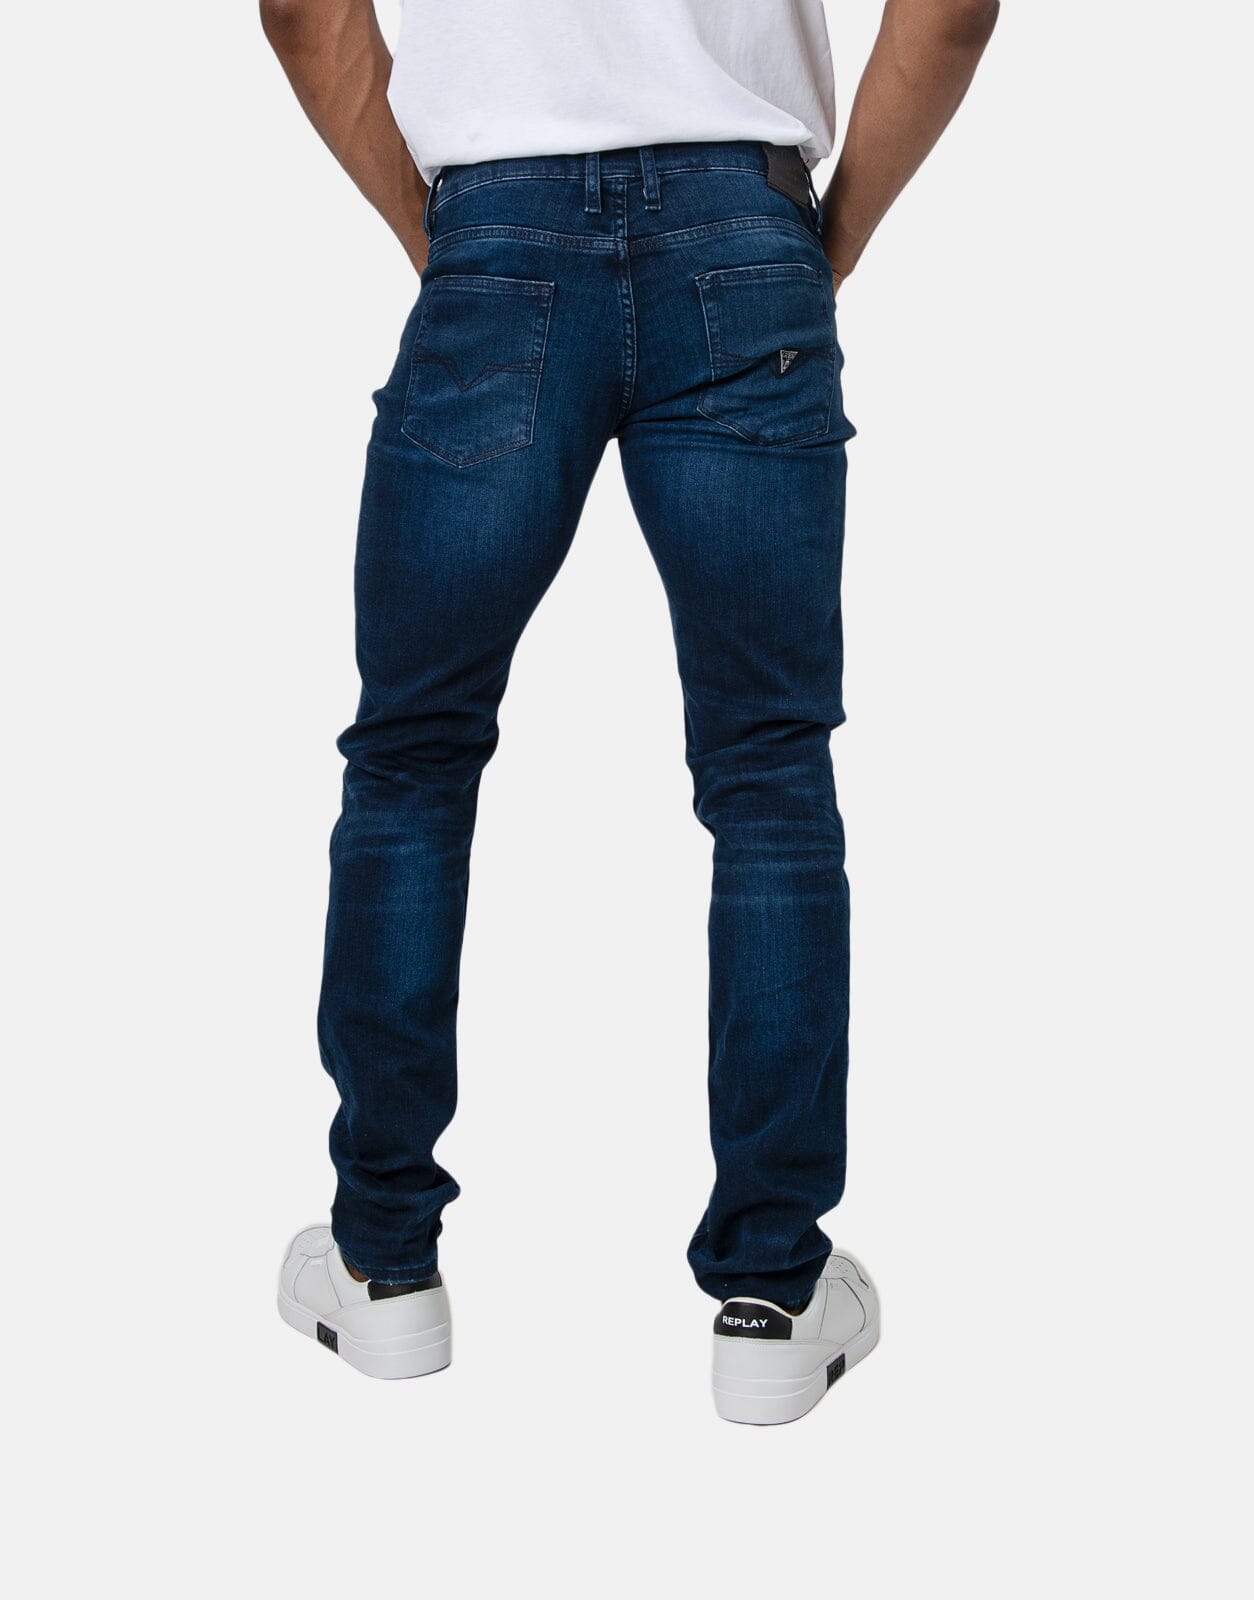 Guess Ringer Dark Eco Slim Taper Jeans - Subwear